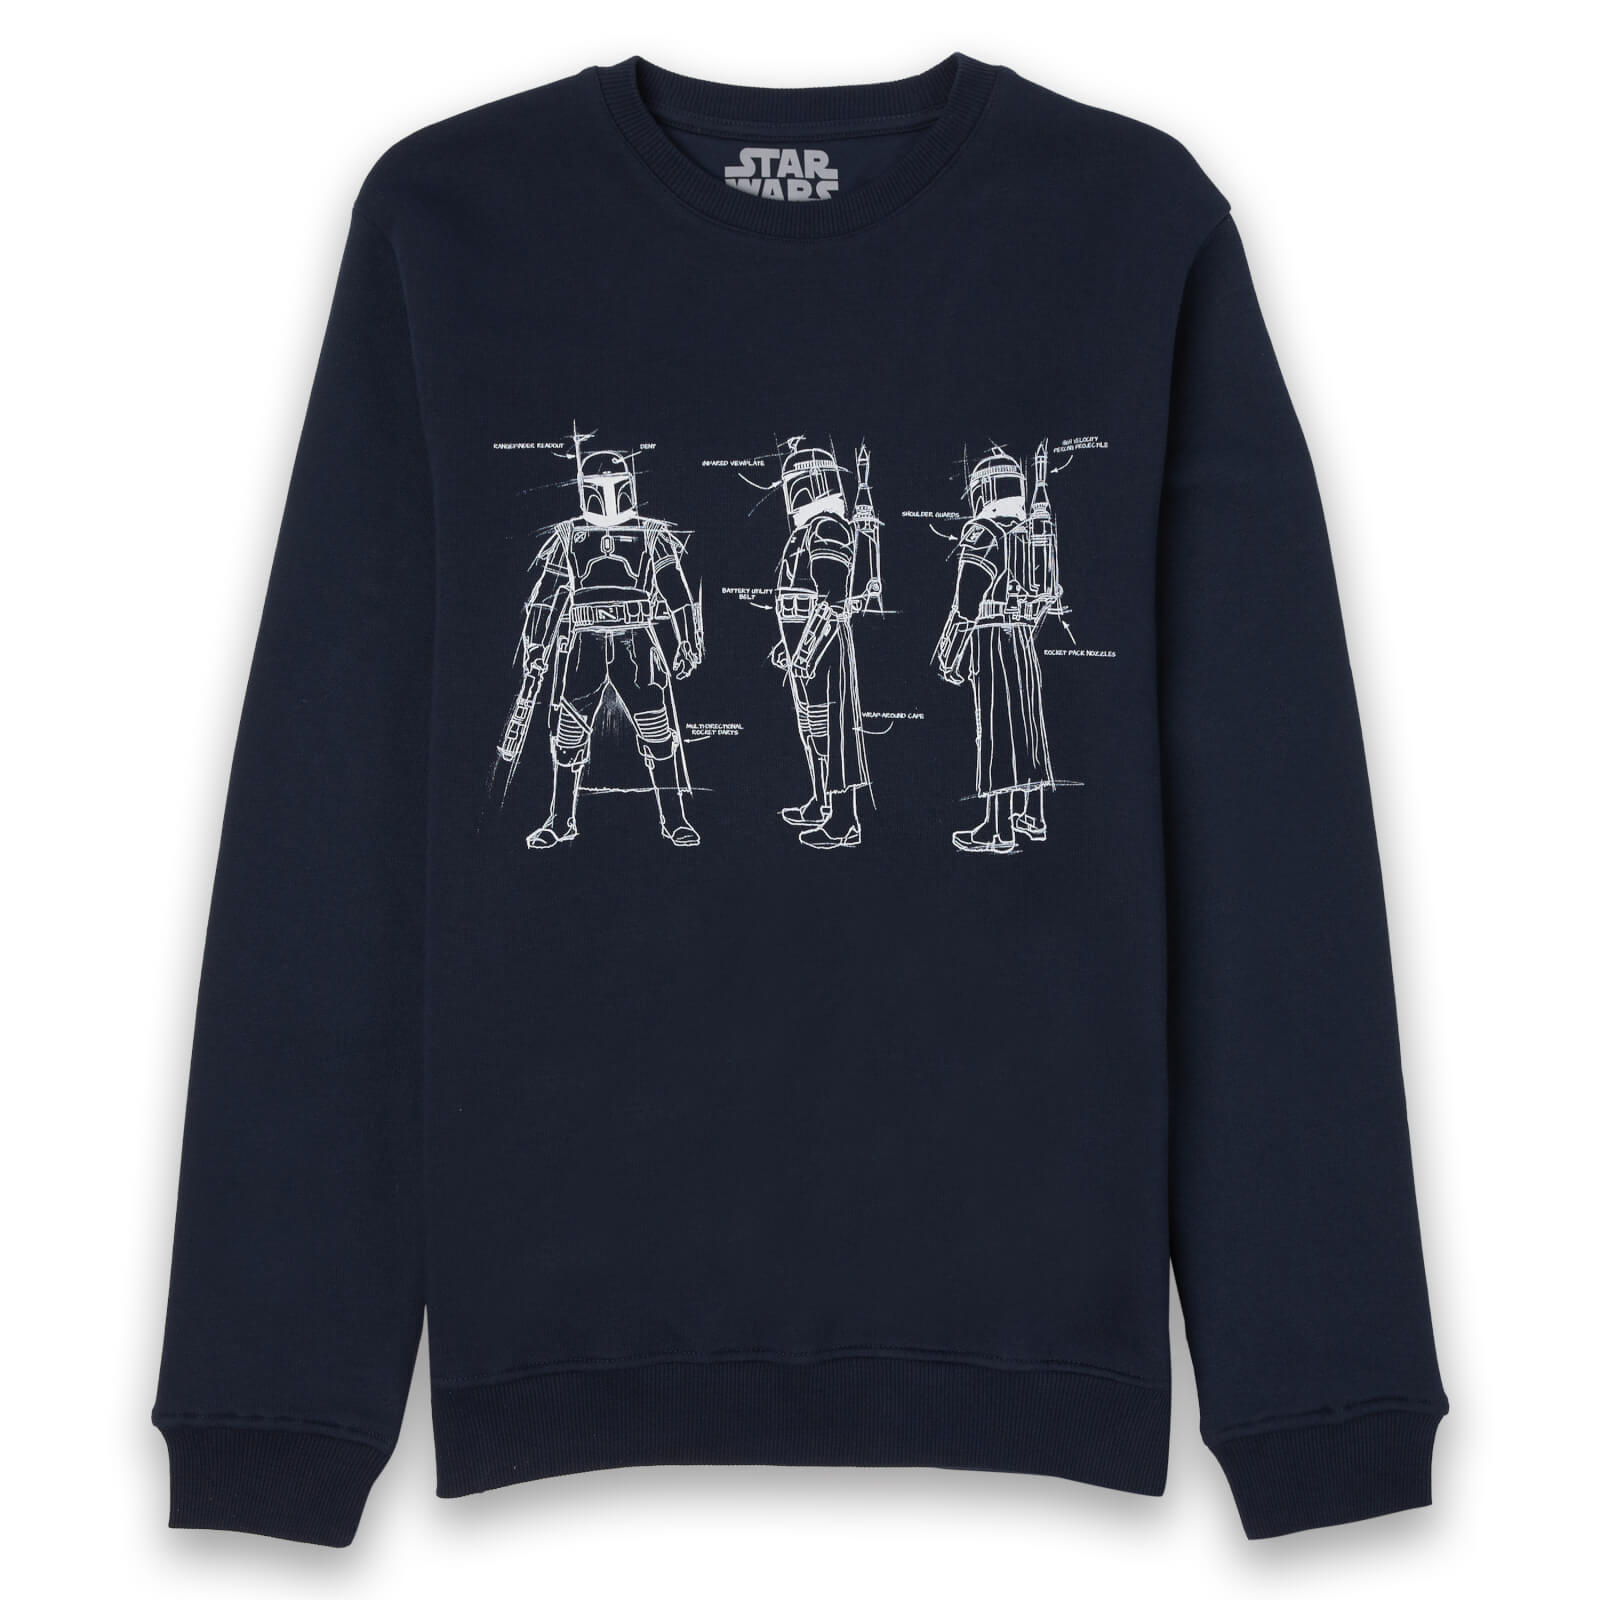 Star Wars Rotating Sketches Unisex Sweatshirt - Navy - S - Navy blauw